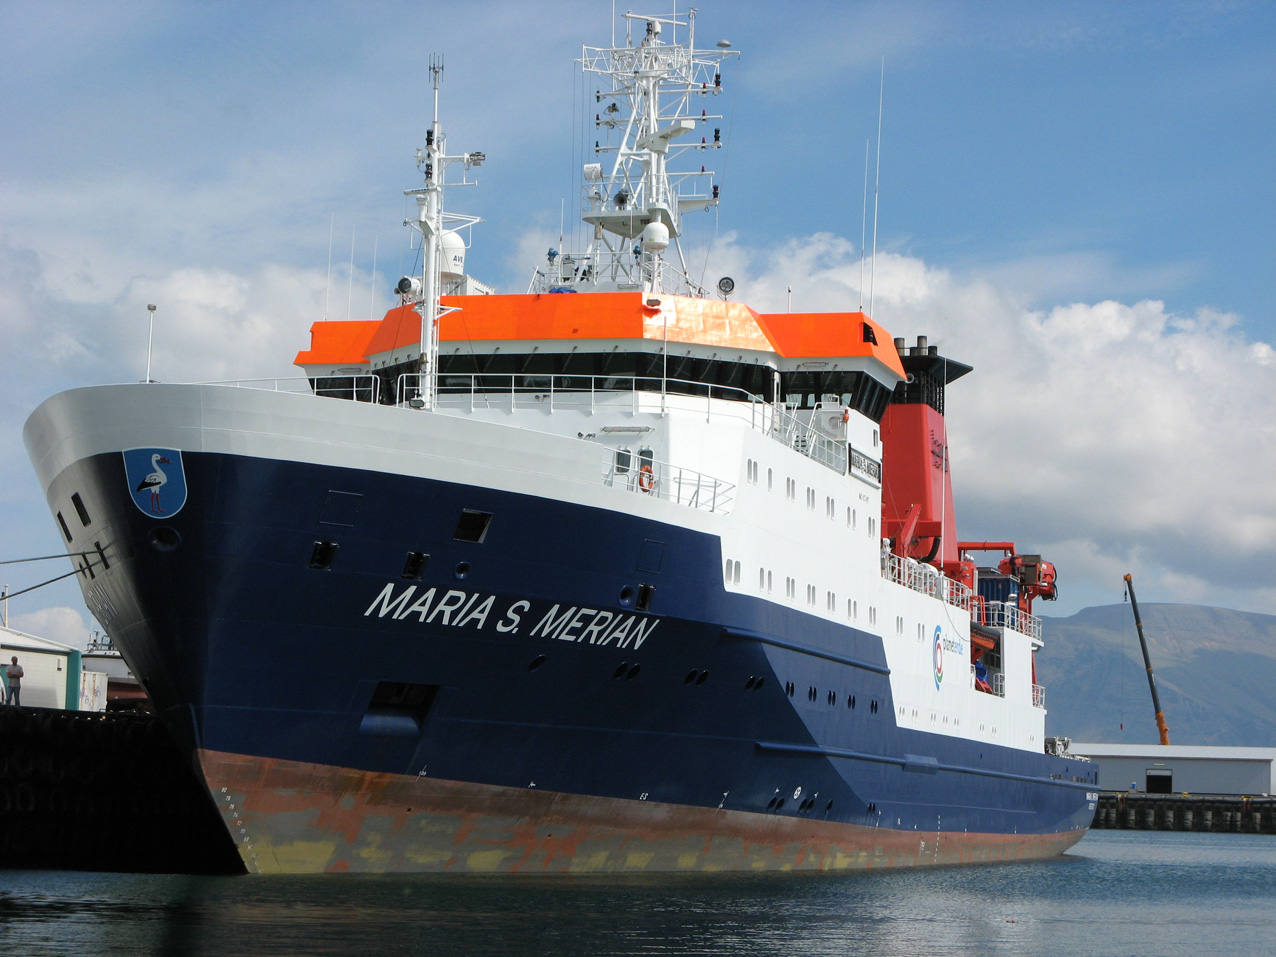 The German research vessel Maria S Merian